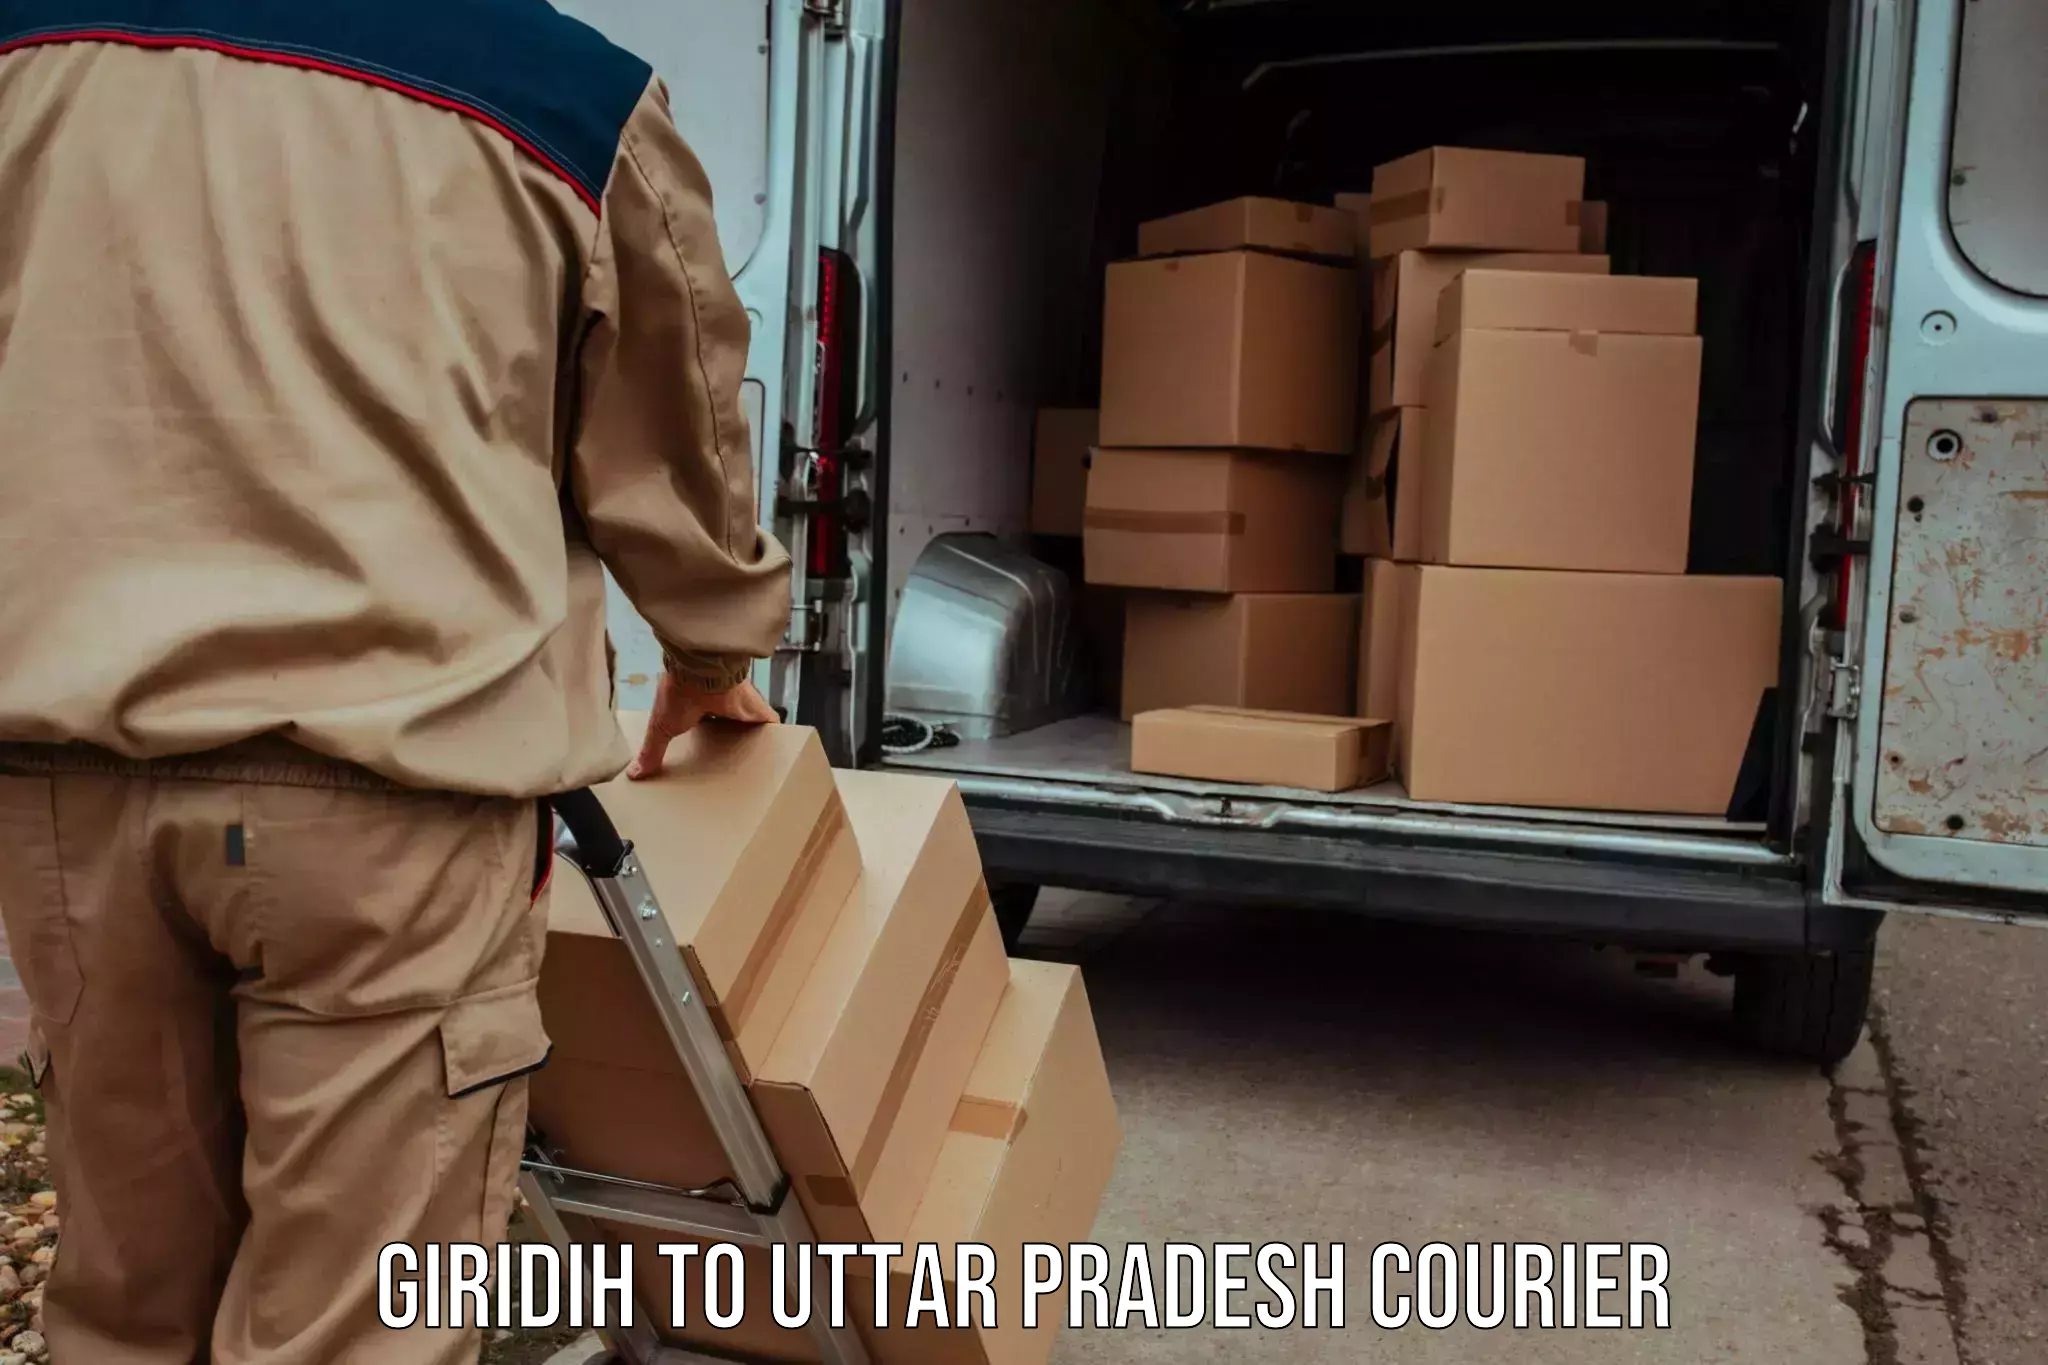 Cash on delivery service Giridih to Mainpuri